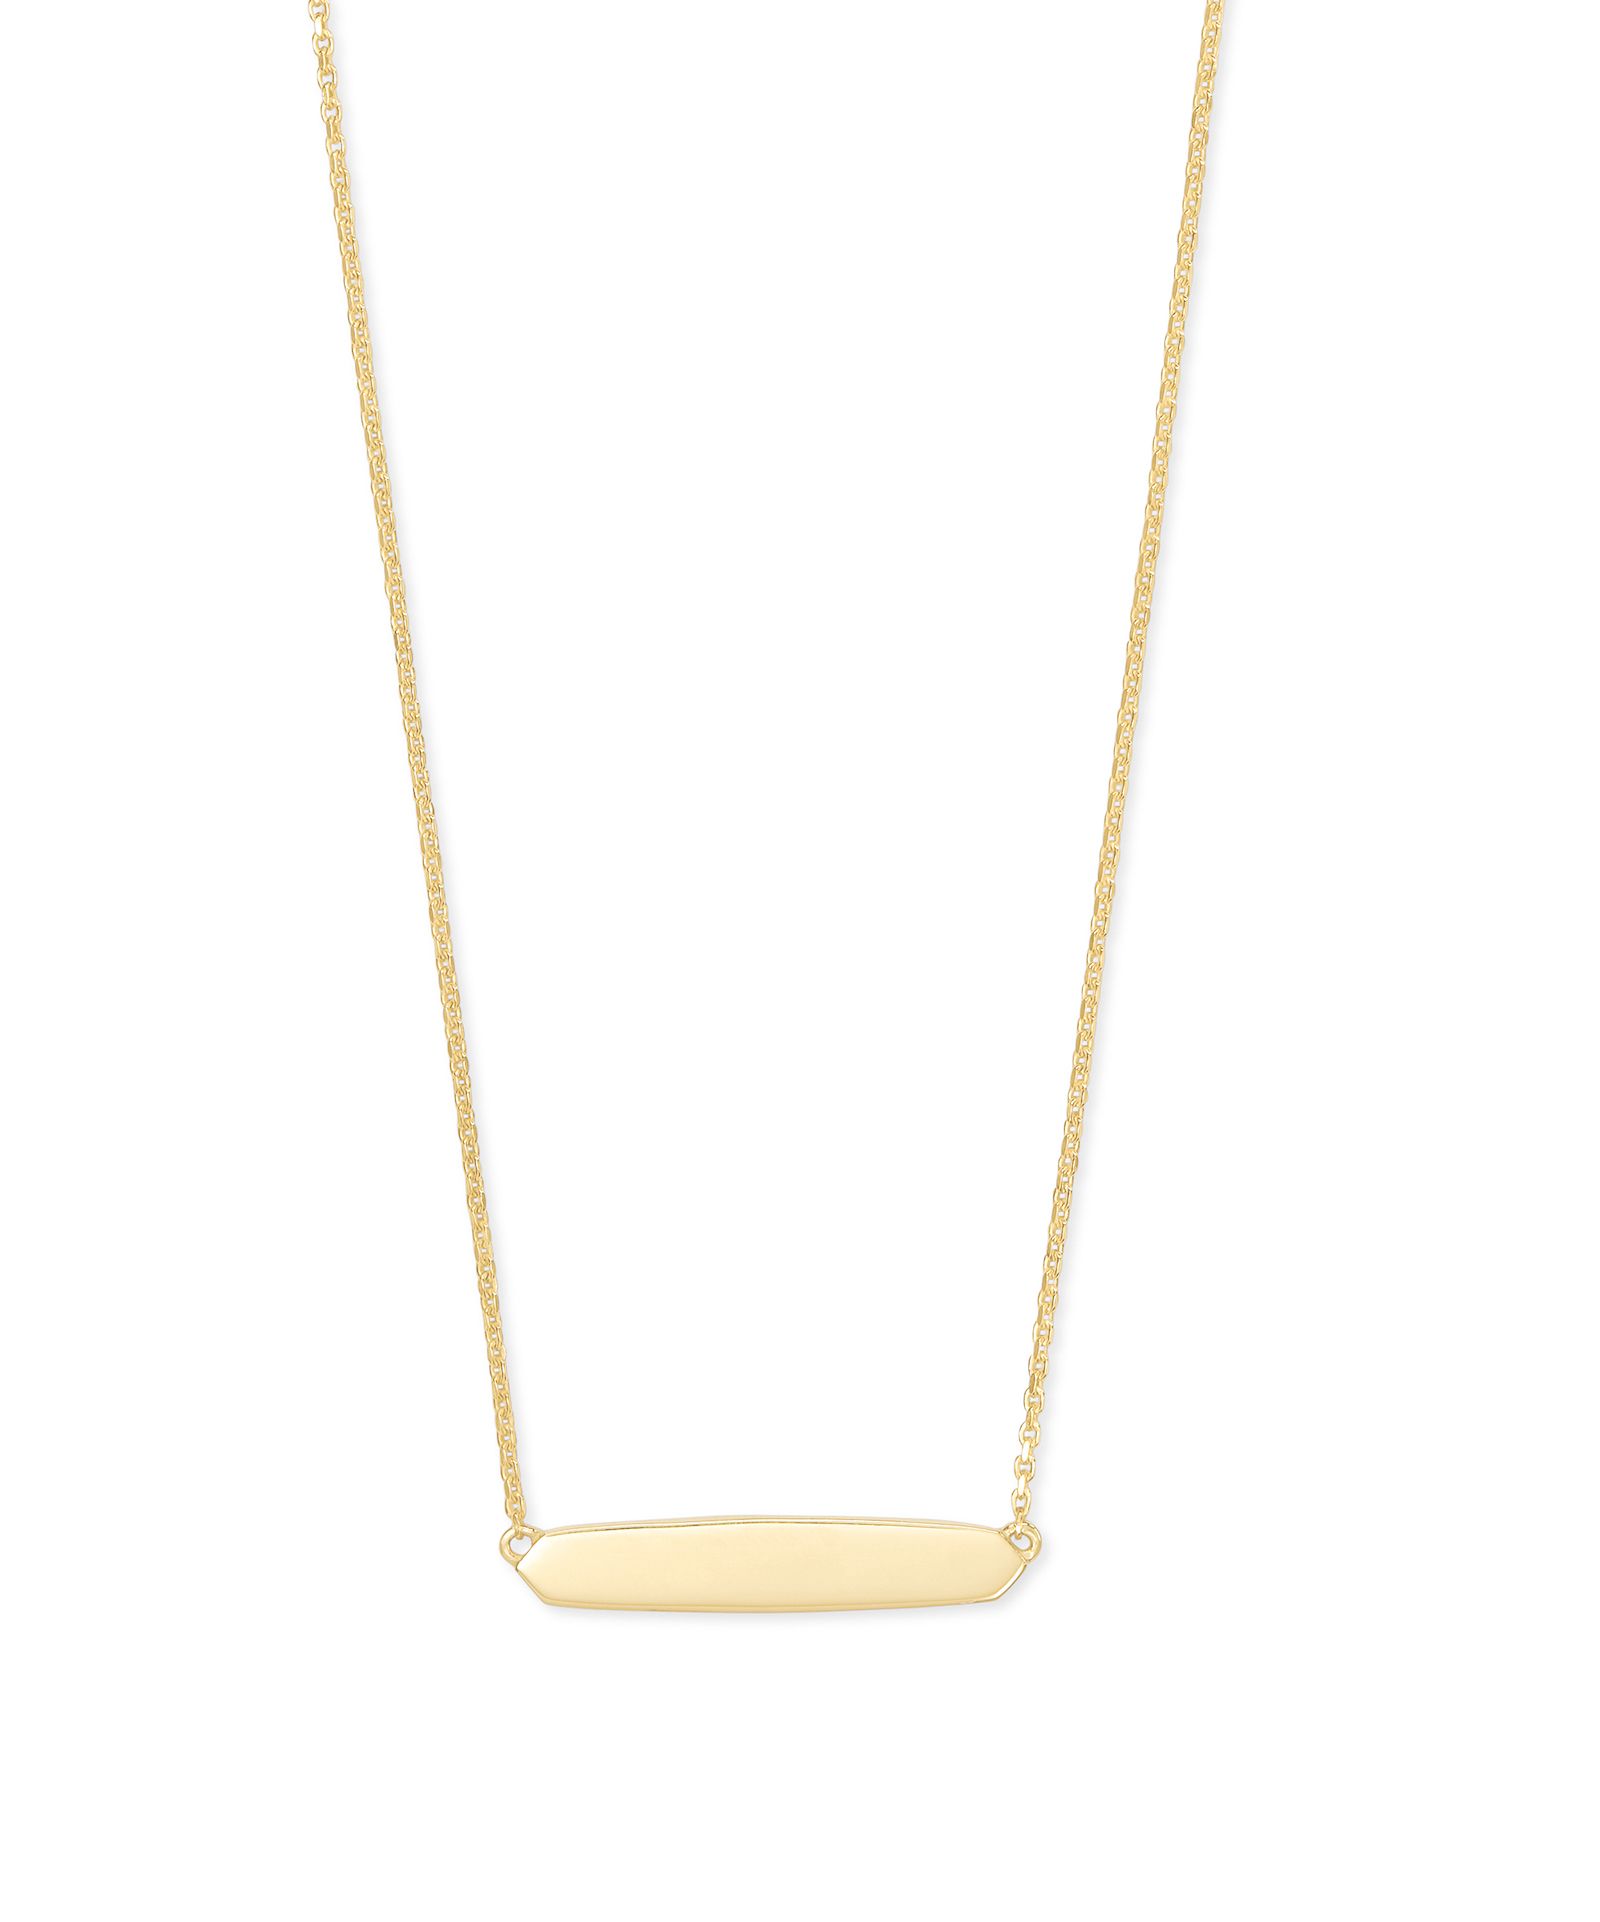 Mattie Bar Pendant Necklace in 18k Gold Vermeil | Kendra Scott